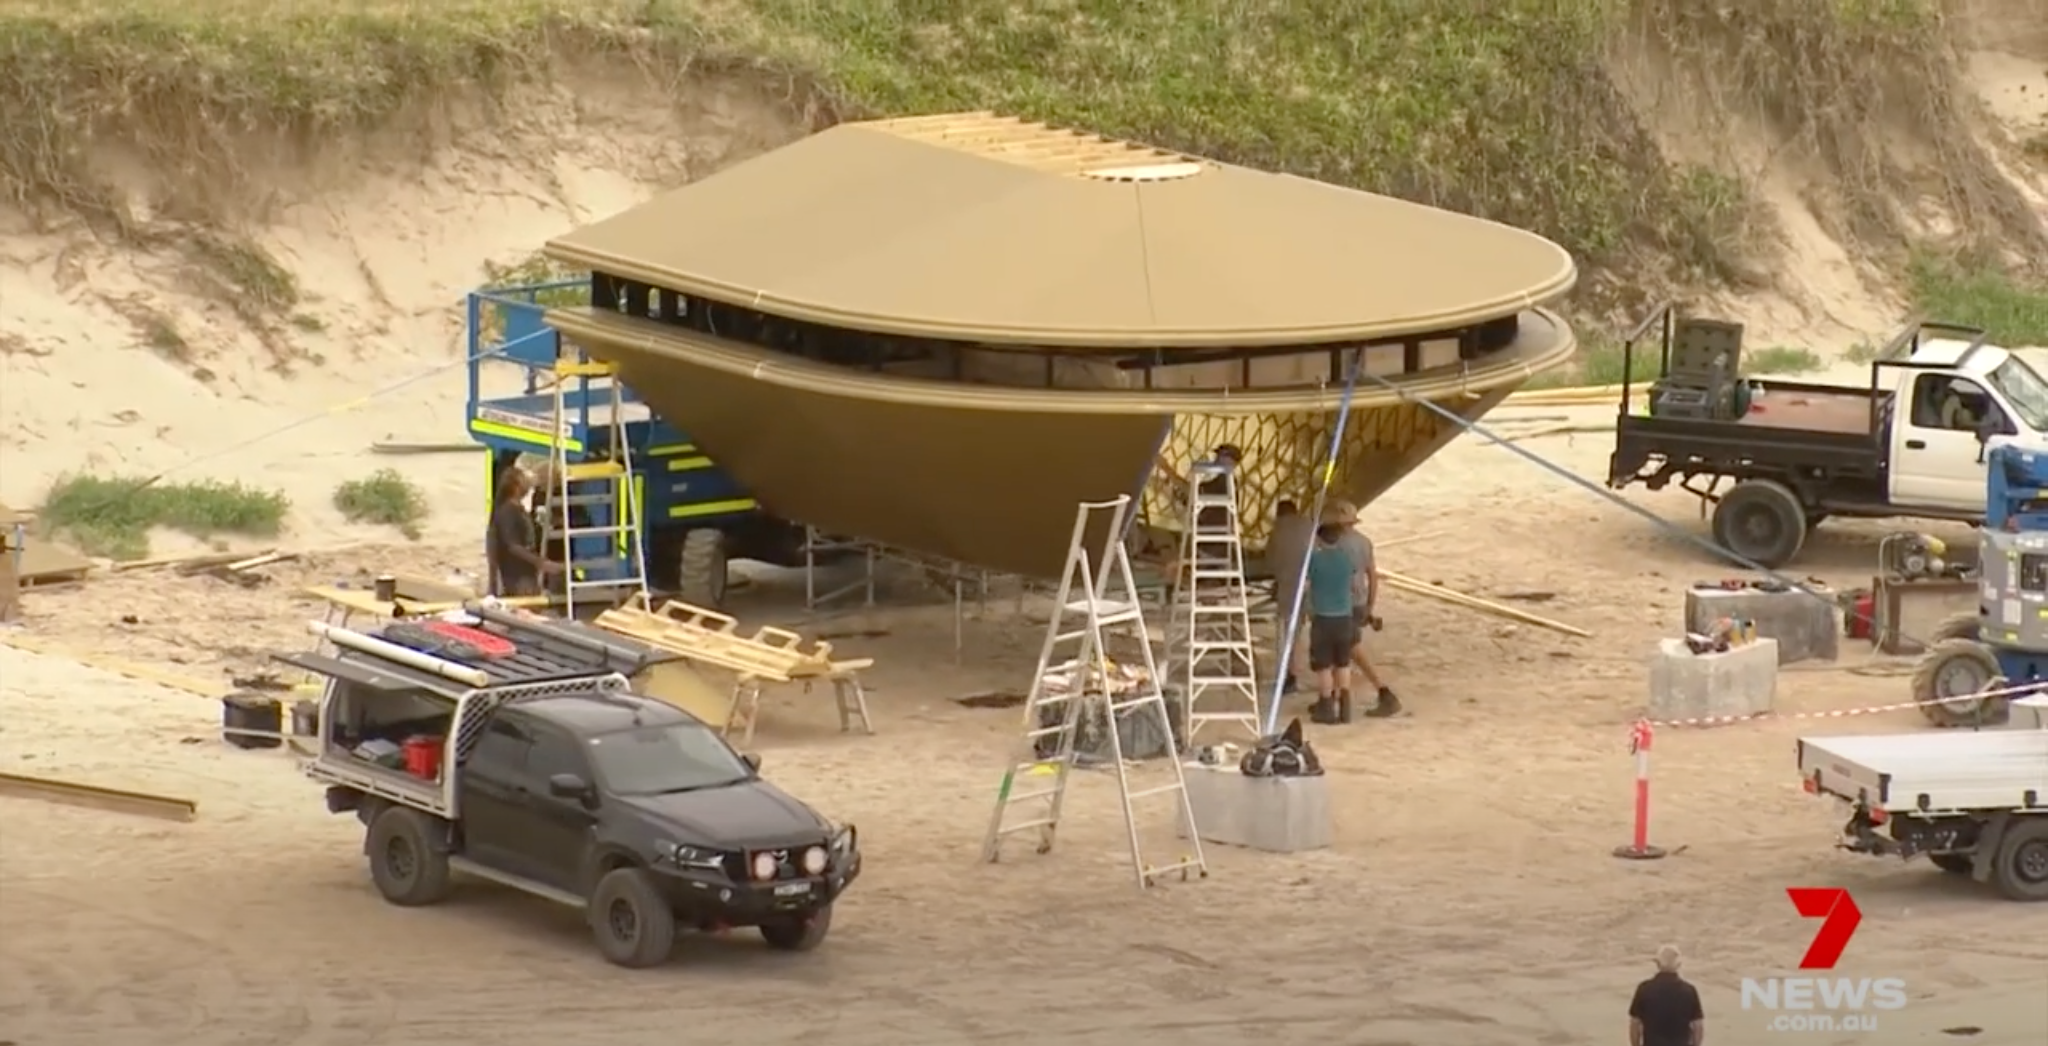 The Fall Guy filming locations in Sydney, Australia - spaceship - Kurnell Beach - Ryan Gosling Emily Blunt